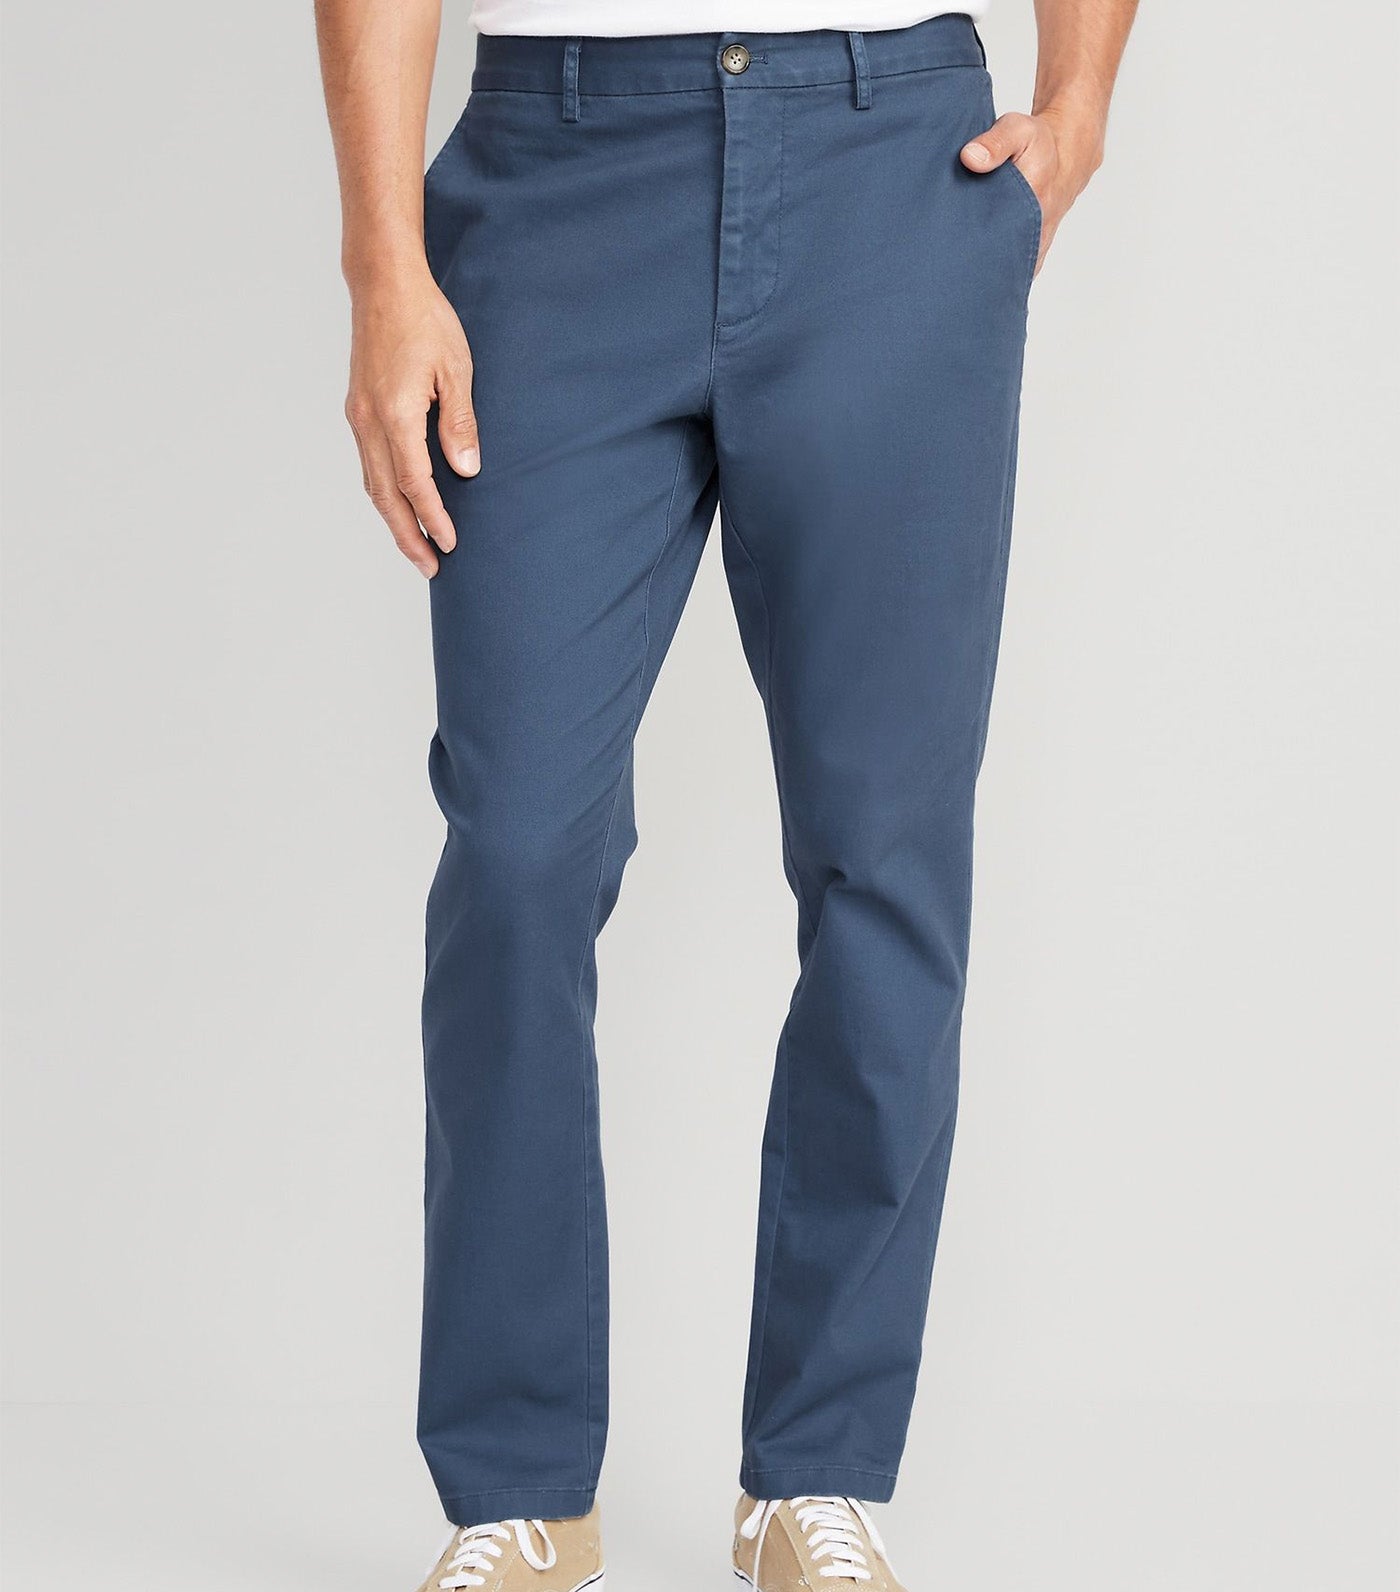 Slim Built-In Flex Rotation Chino Pants for Men Calm Night